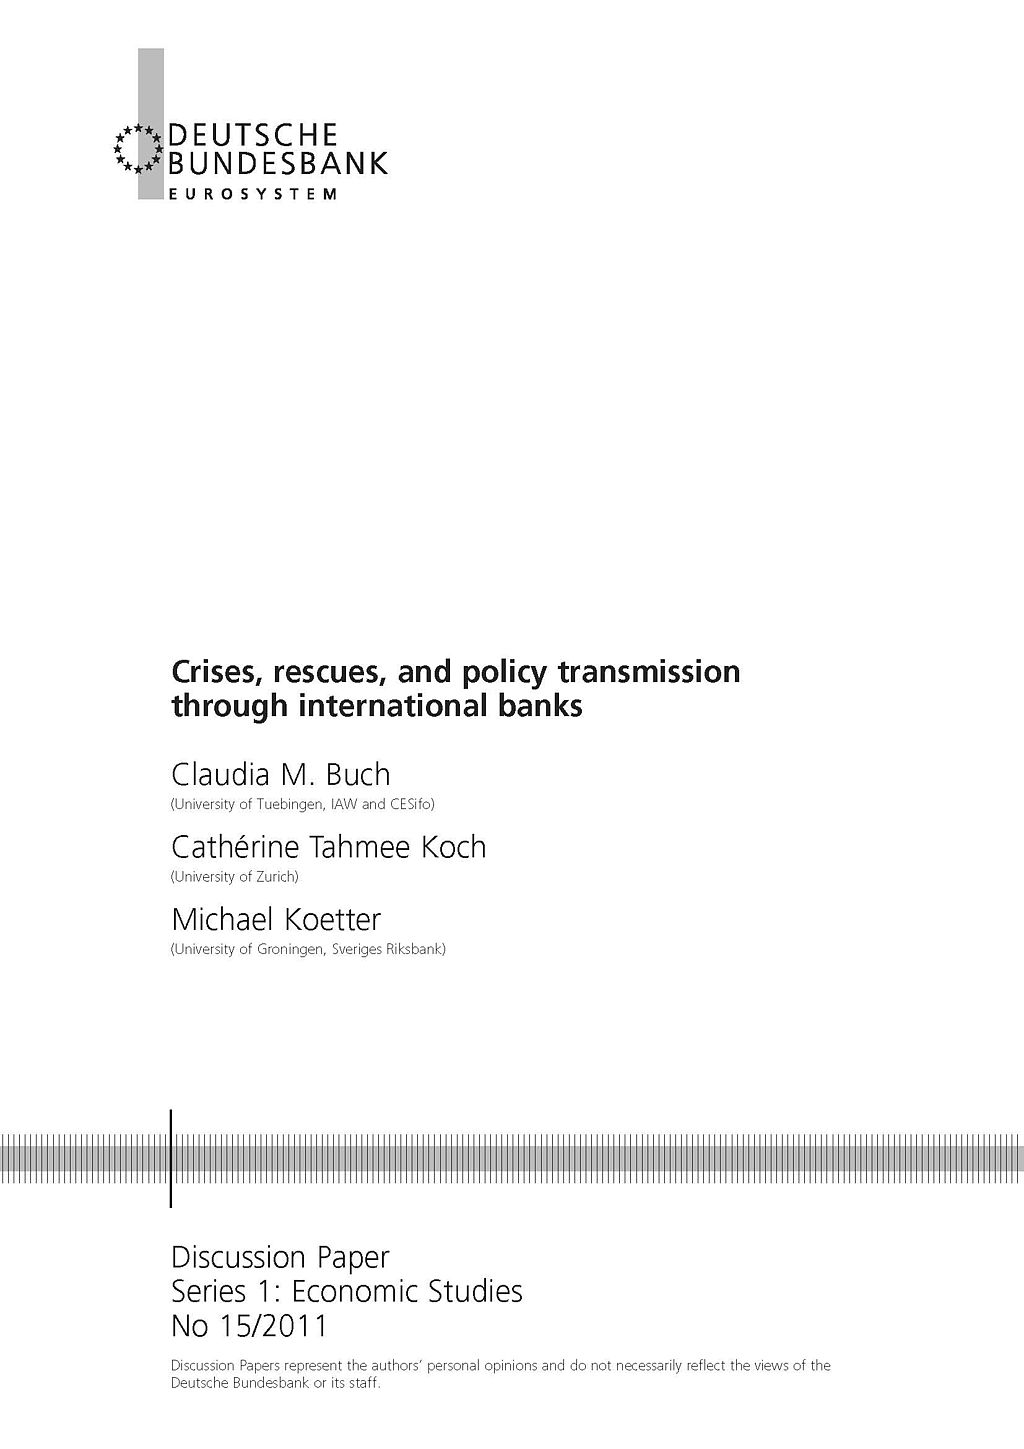 cover_Deutsche-Bundesbank-Discussion-Paper_2011-15.jpg